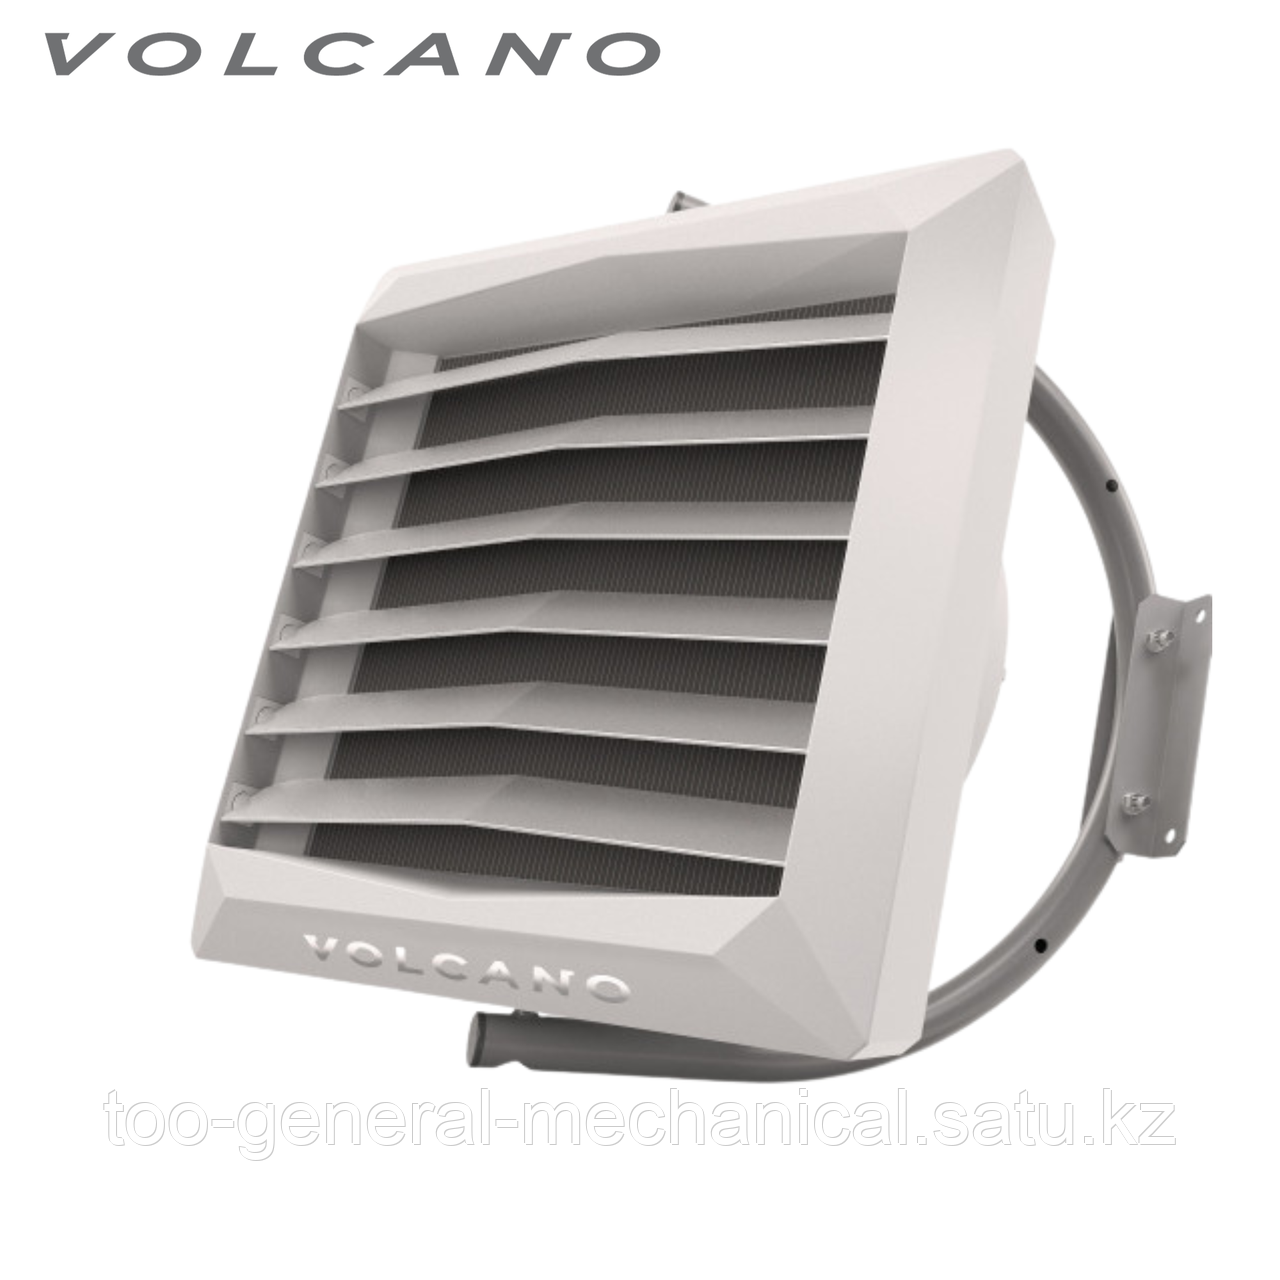 Volcano VR-D EC. дестратификатор, модель  Volcano VR-D EC